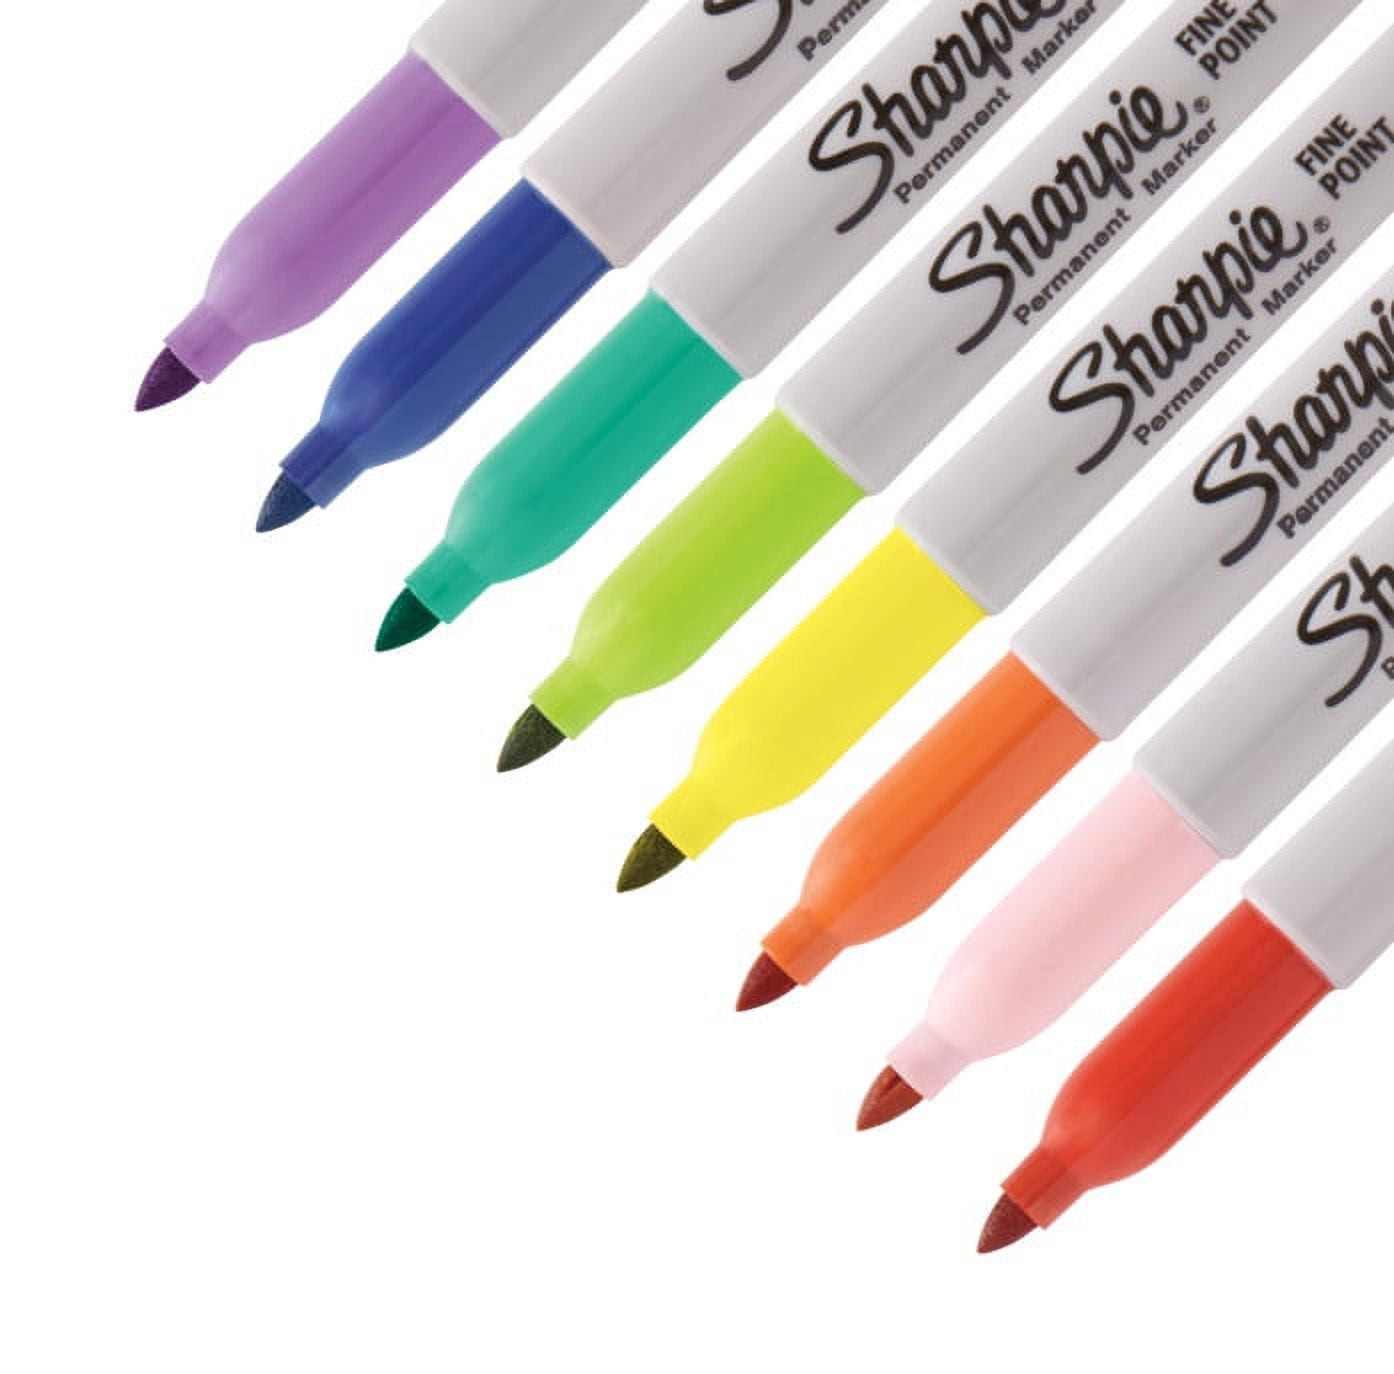 Marcadores Sharpie Coloring Kit X 21 Piezas